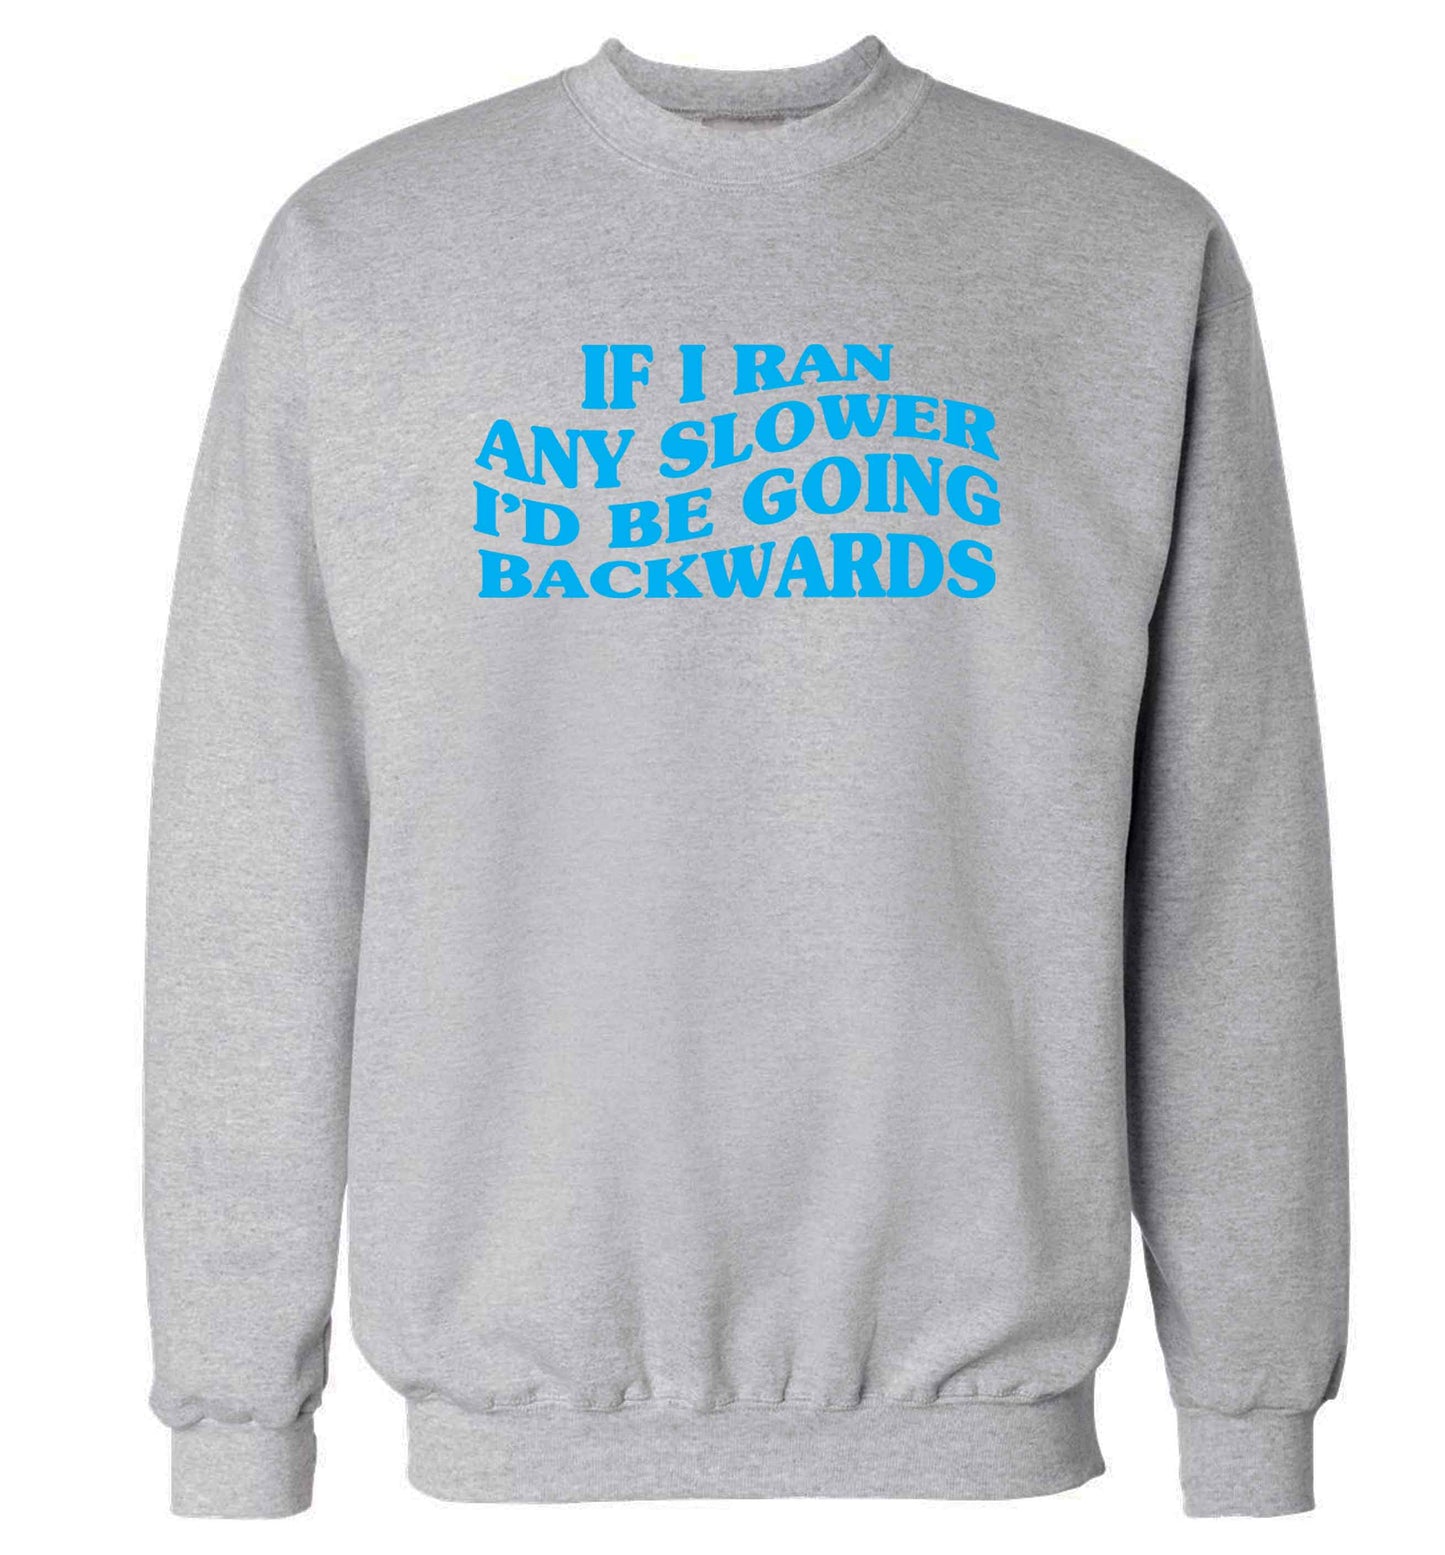 If I ran any slower I'd be going backwards adult's unisex grey sweater 2XL